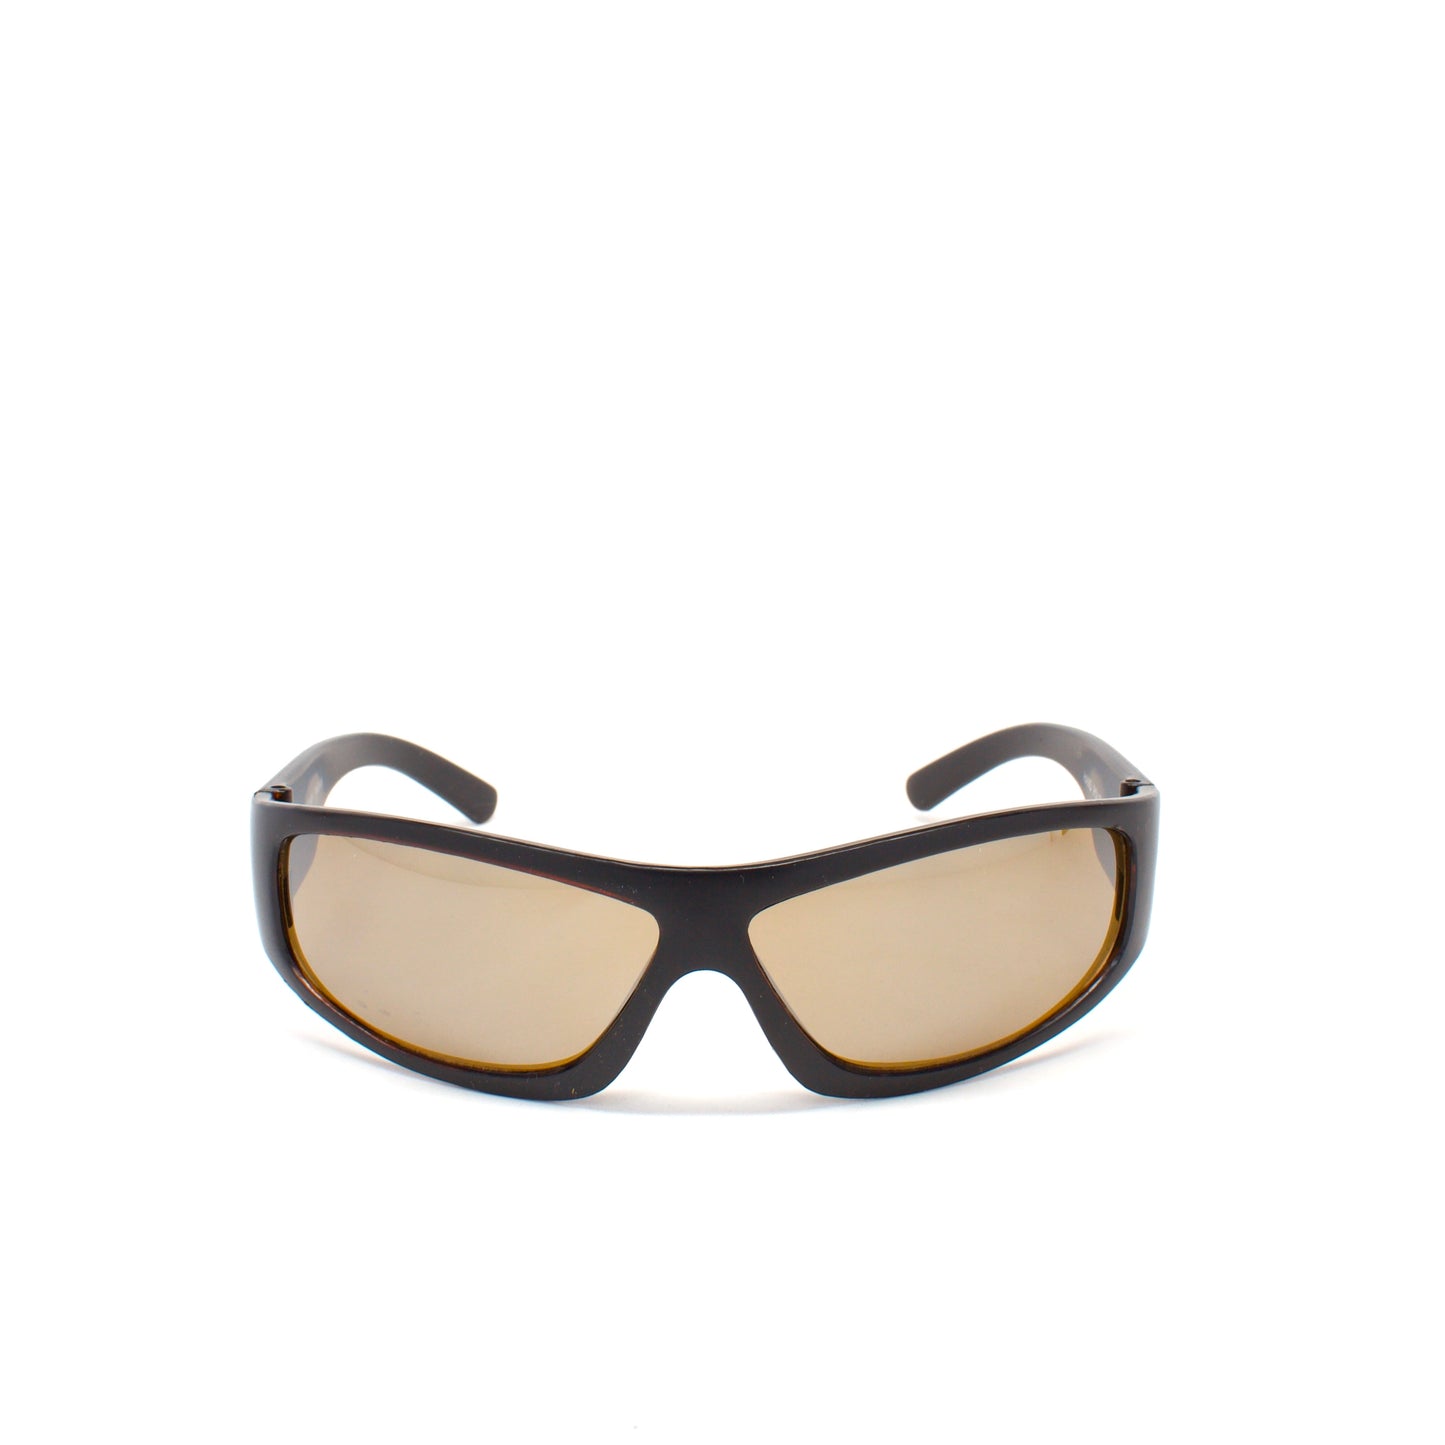 Concept 4 Oversized Lens 2000s Wraparound Visor Sunglasses - Red